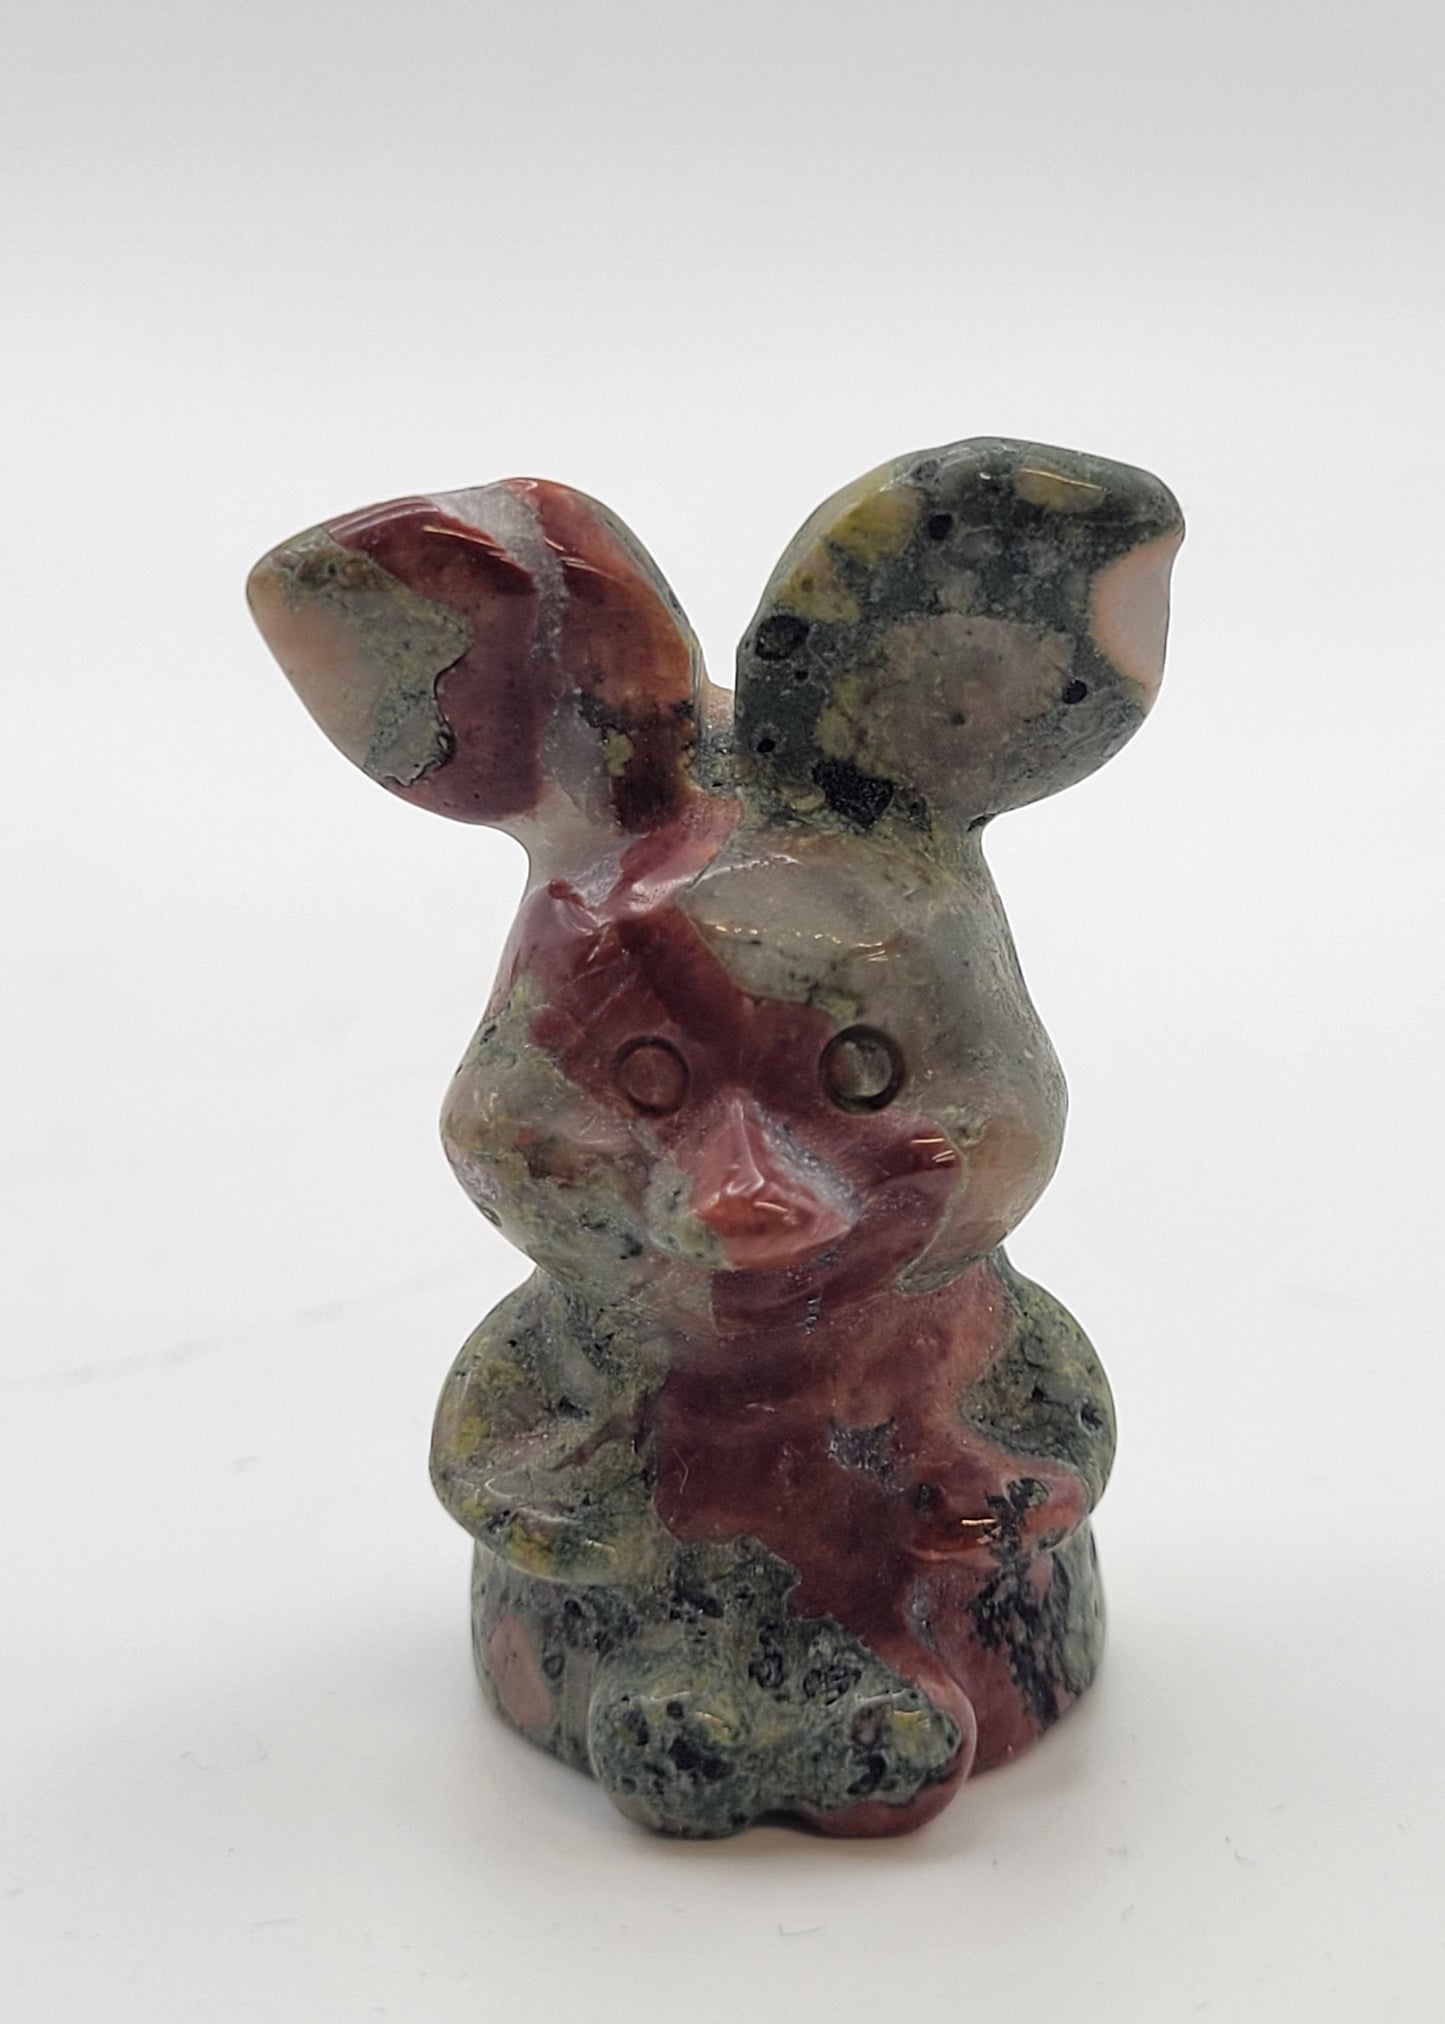 Piglet (Winnie the Pooh) carving